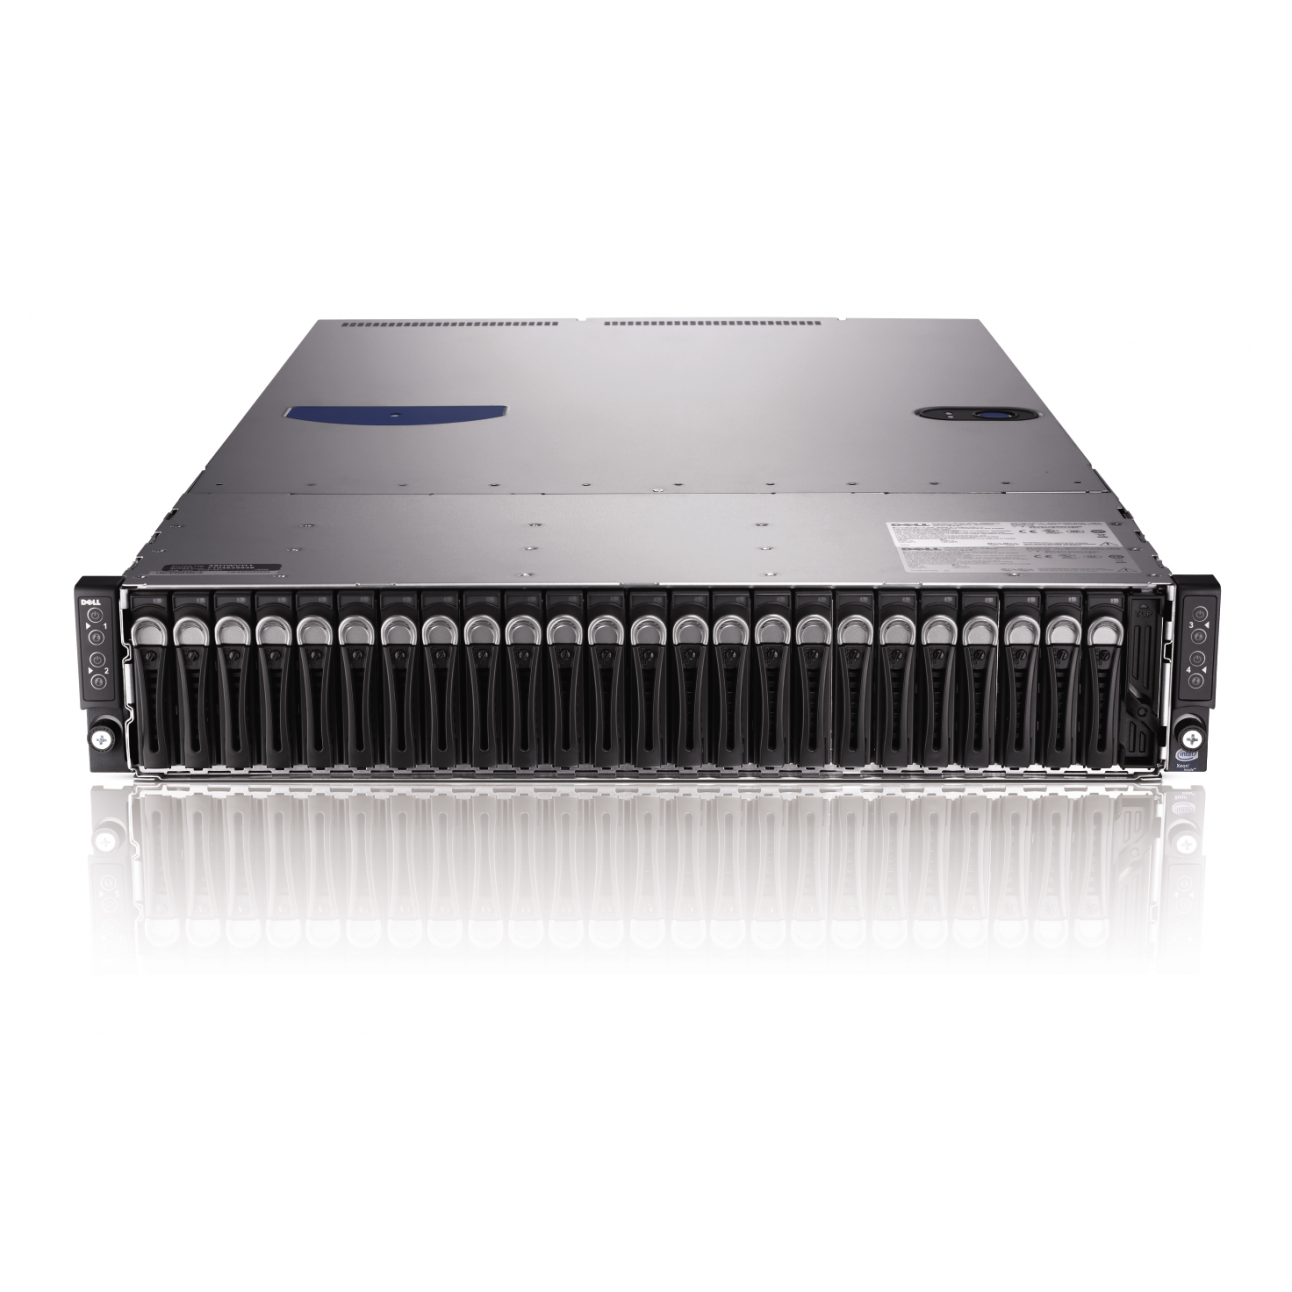 Сервер Dell PowerEdge C6220, 8 процессоров Intel Xeon 8C E5-2670 2.60GHz, 128GB DRAM, 24 отсека под HDD 2.5"